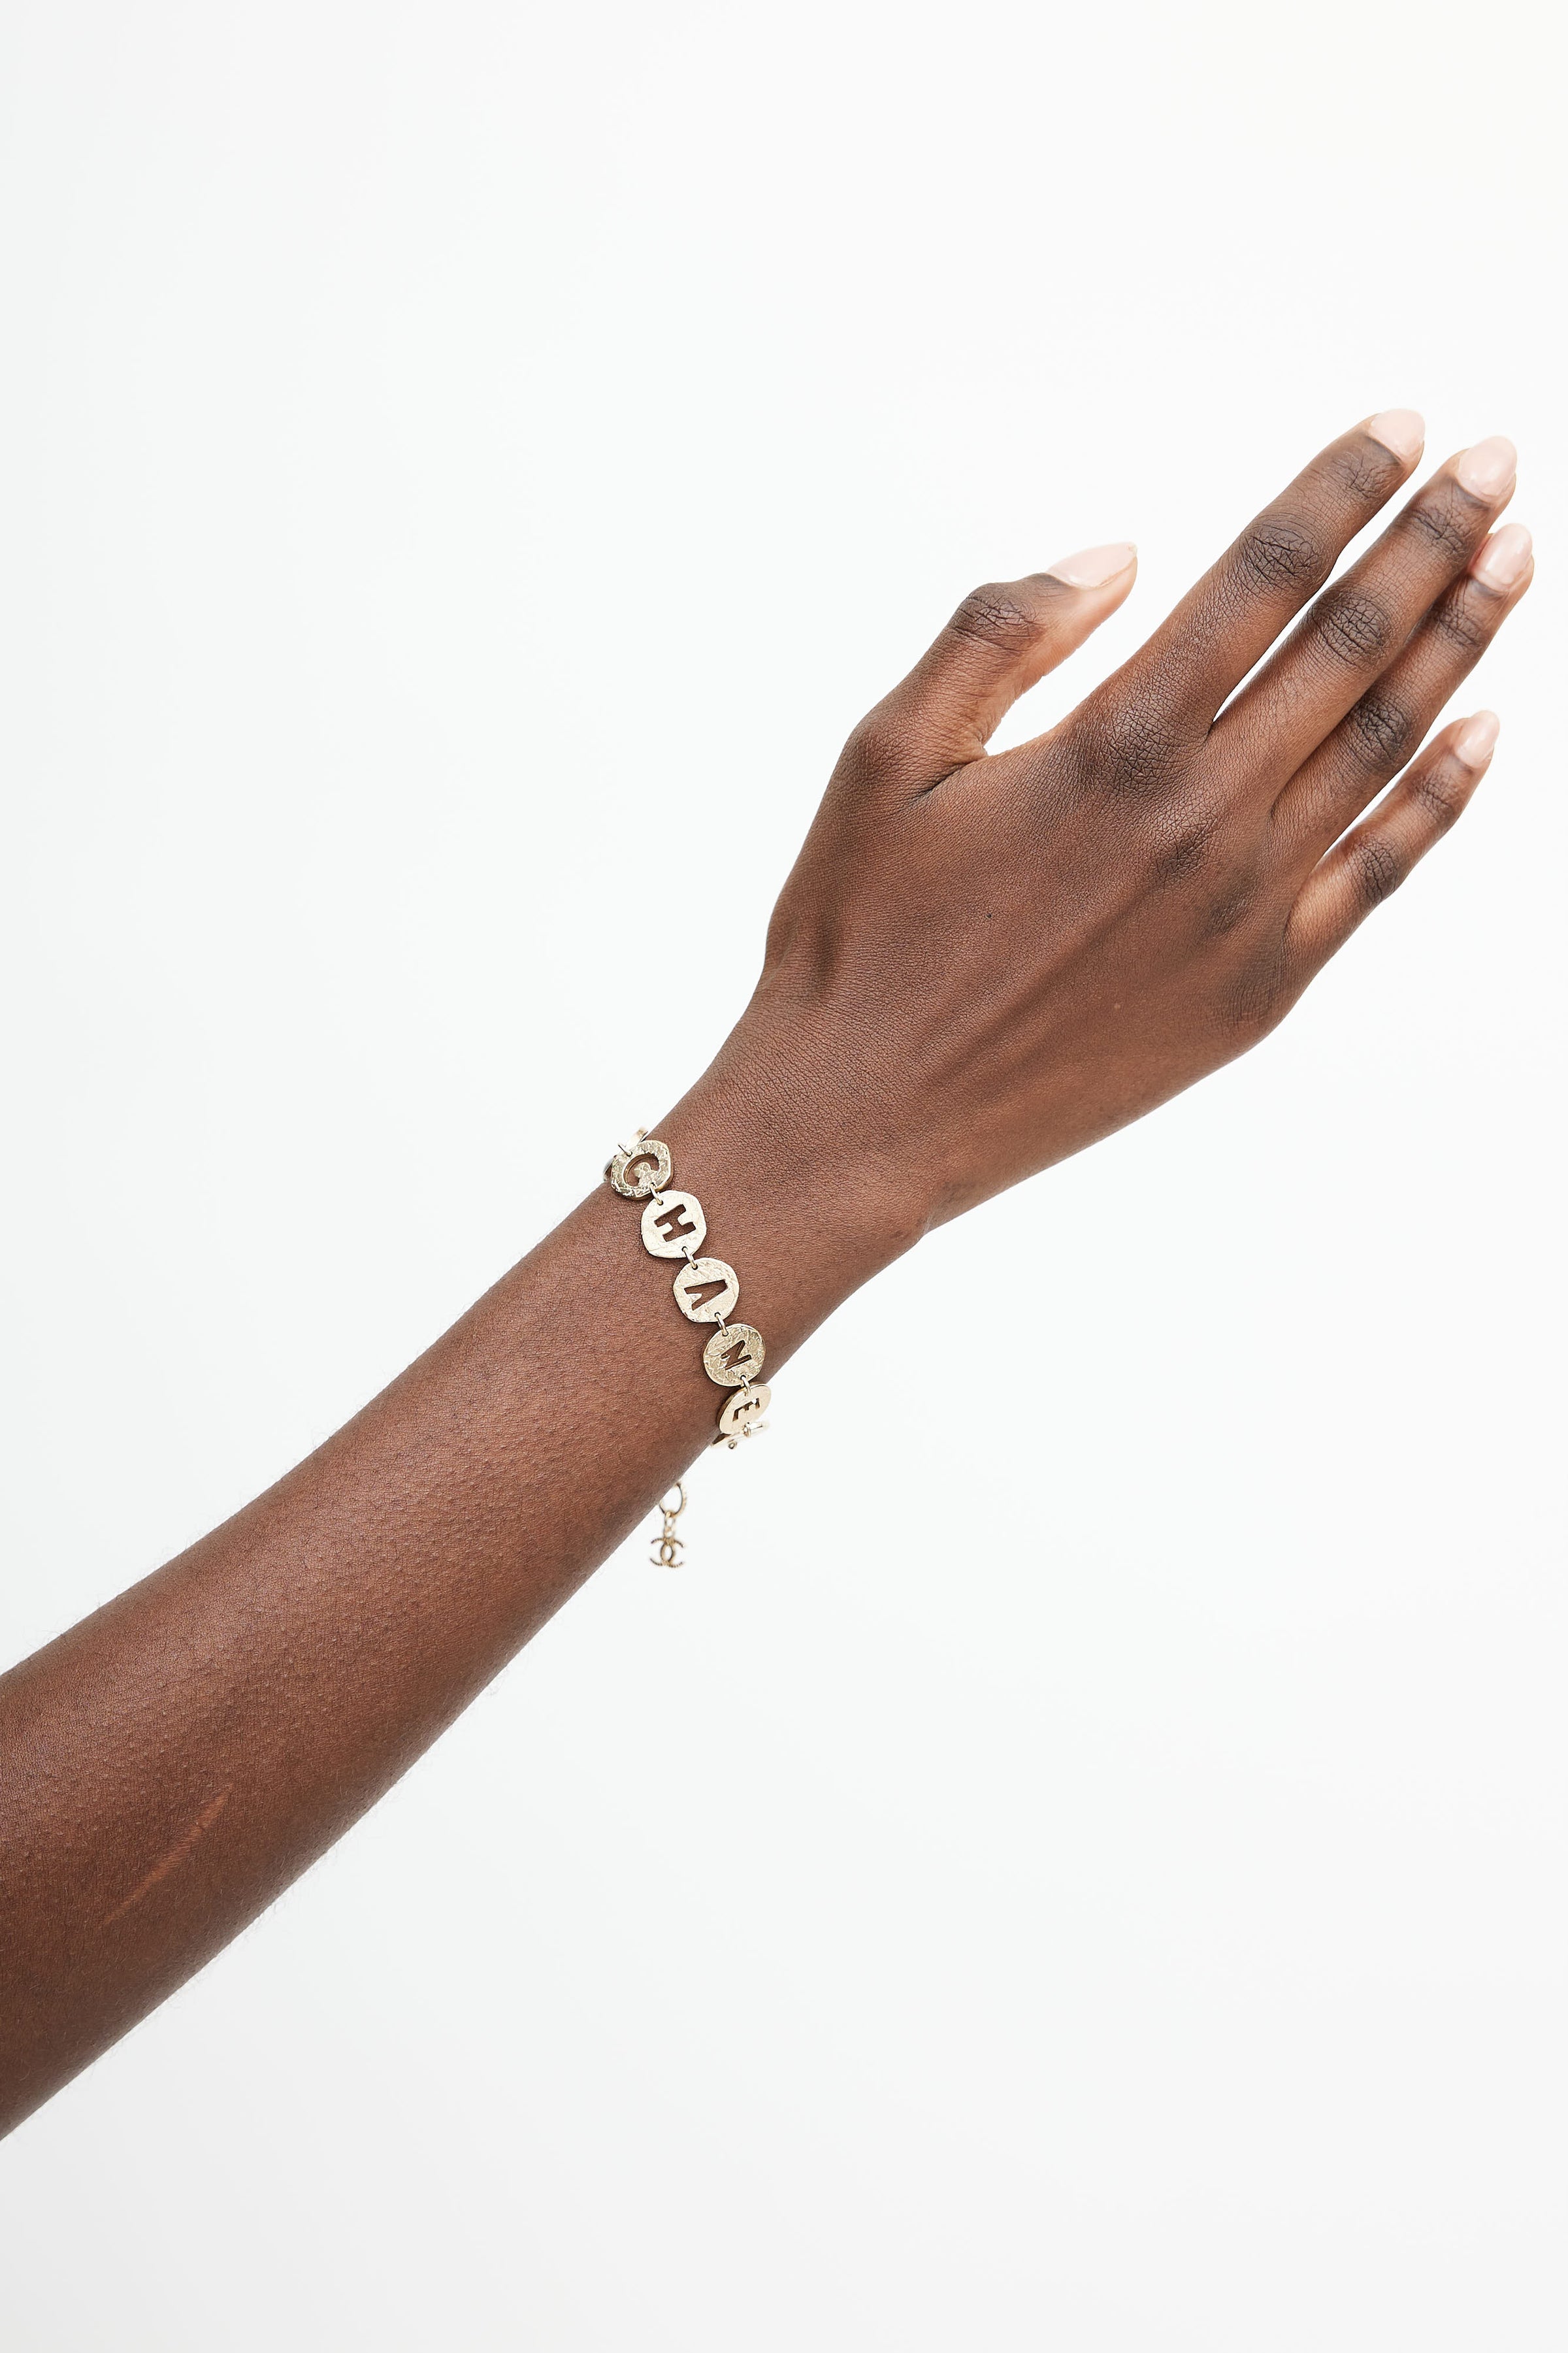 Chanel bracelet goldtone handmade designer inspired 13114 | Chanel jewelry, Chanel  bracelet, Luxury earrings